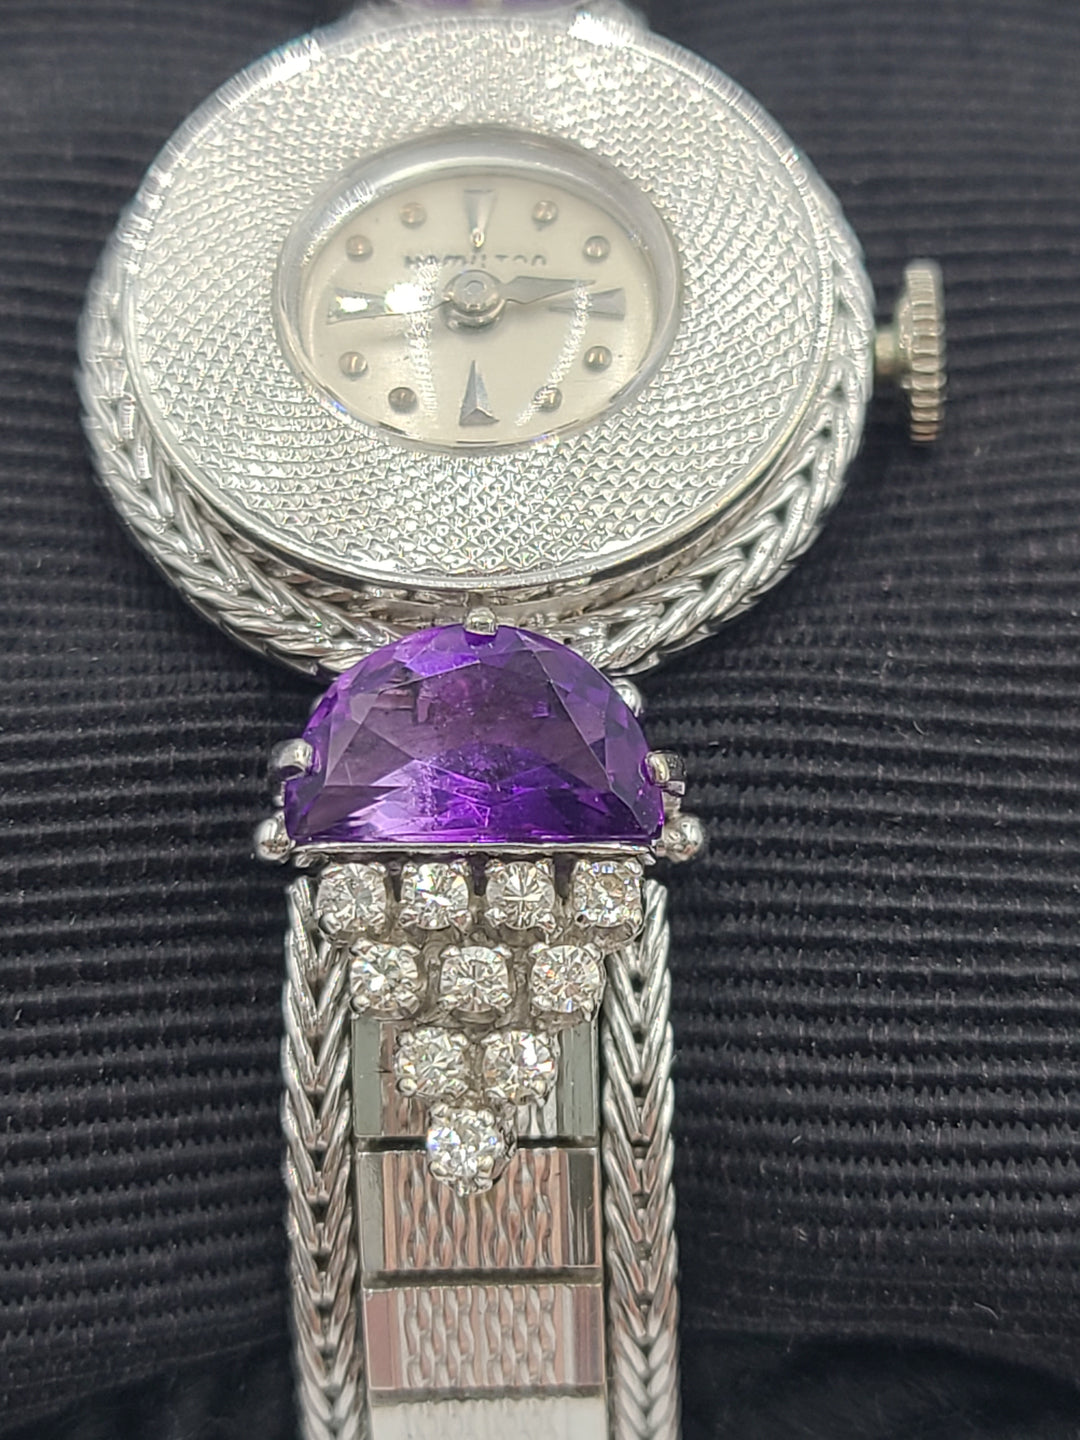 k799 Stunning Ladies Vintage 14kt White Gold Diamond and Amethyst Mechanical Wristwatch